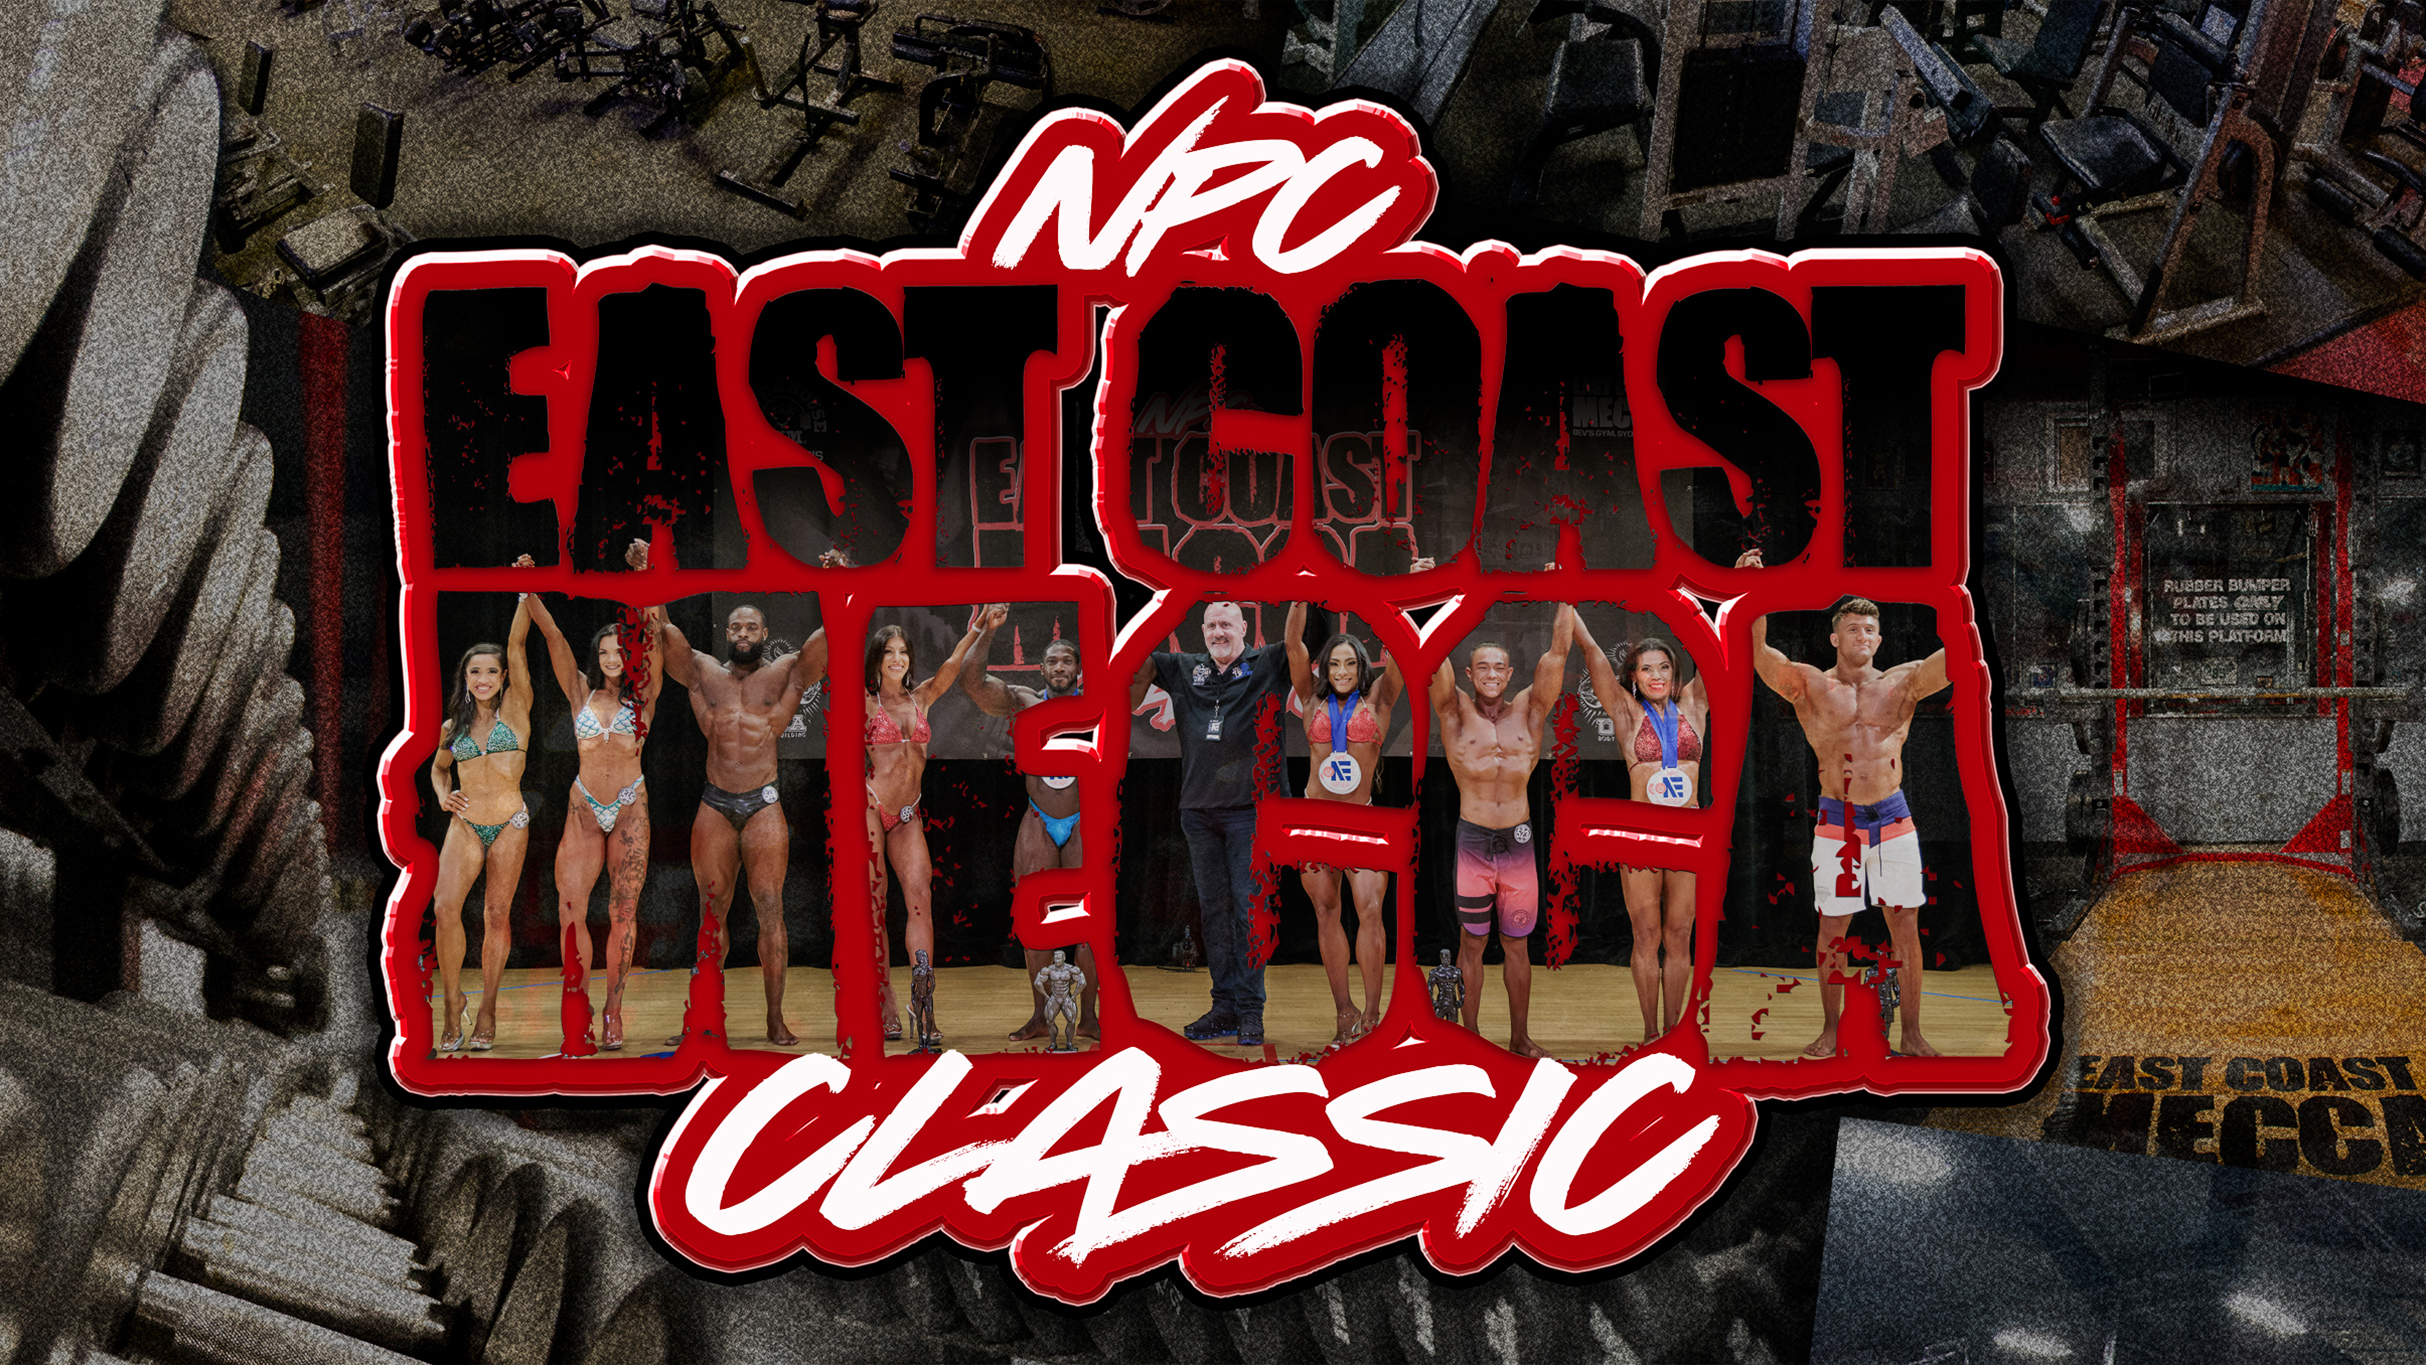 NPC East Coast Mecca Classic